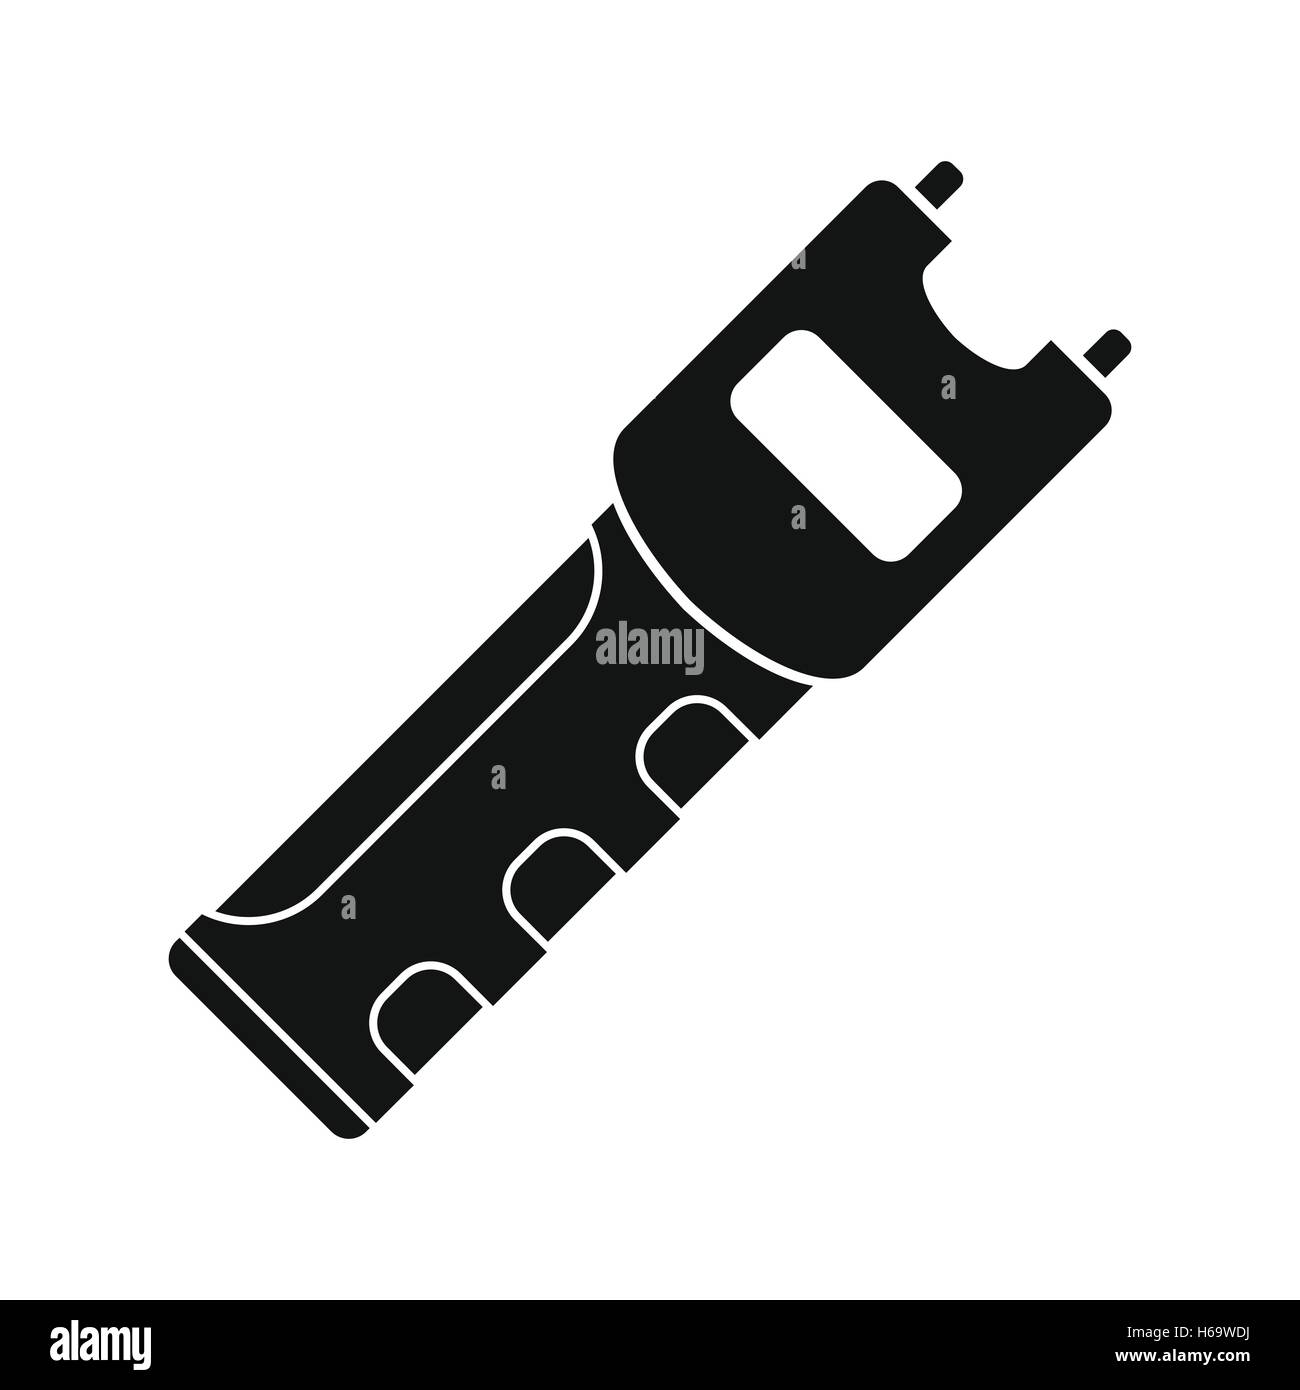 Taser self defense weapon Stock Vector Image & Art - Alamy